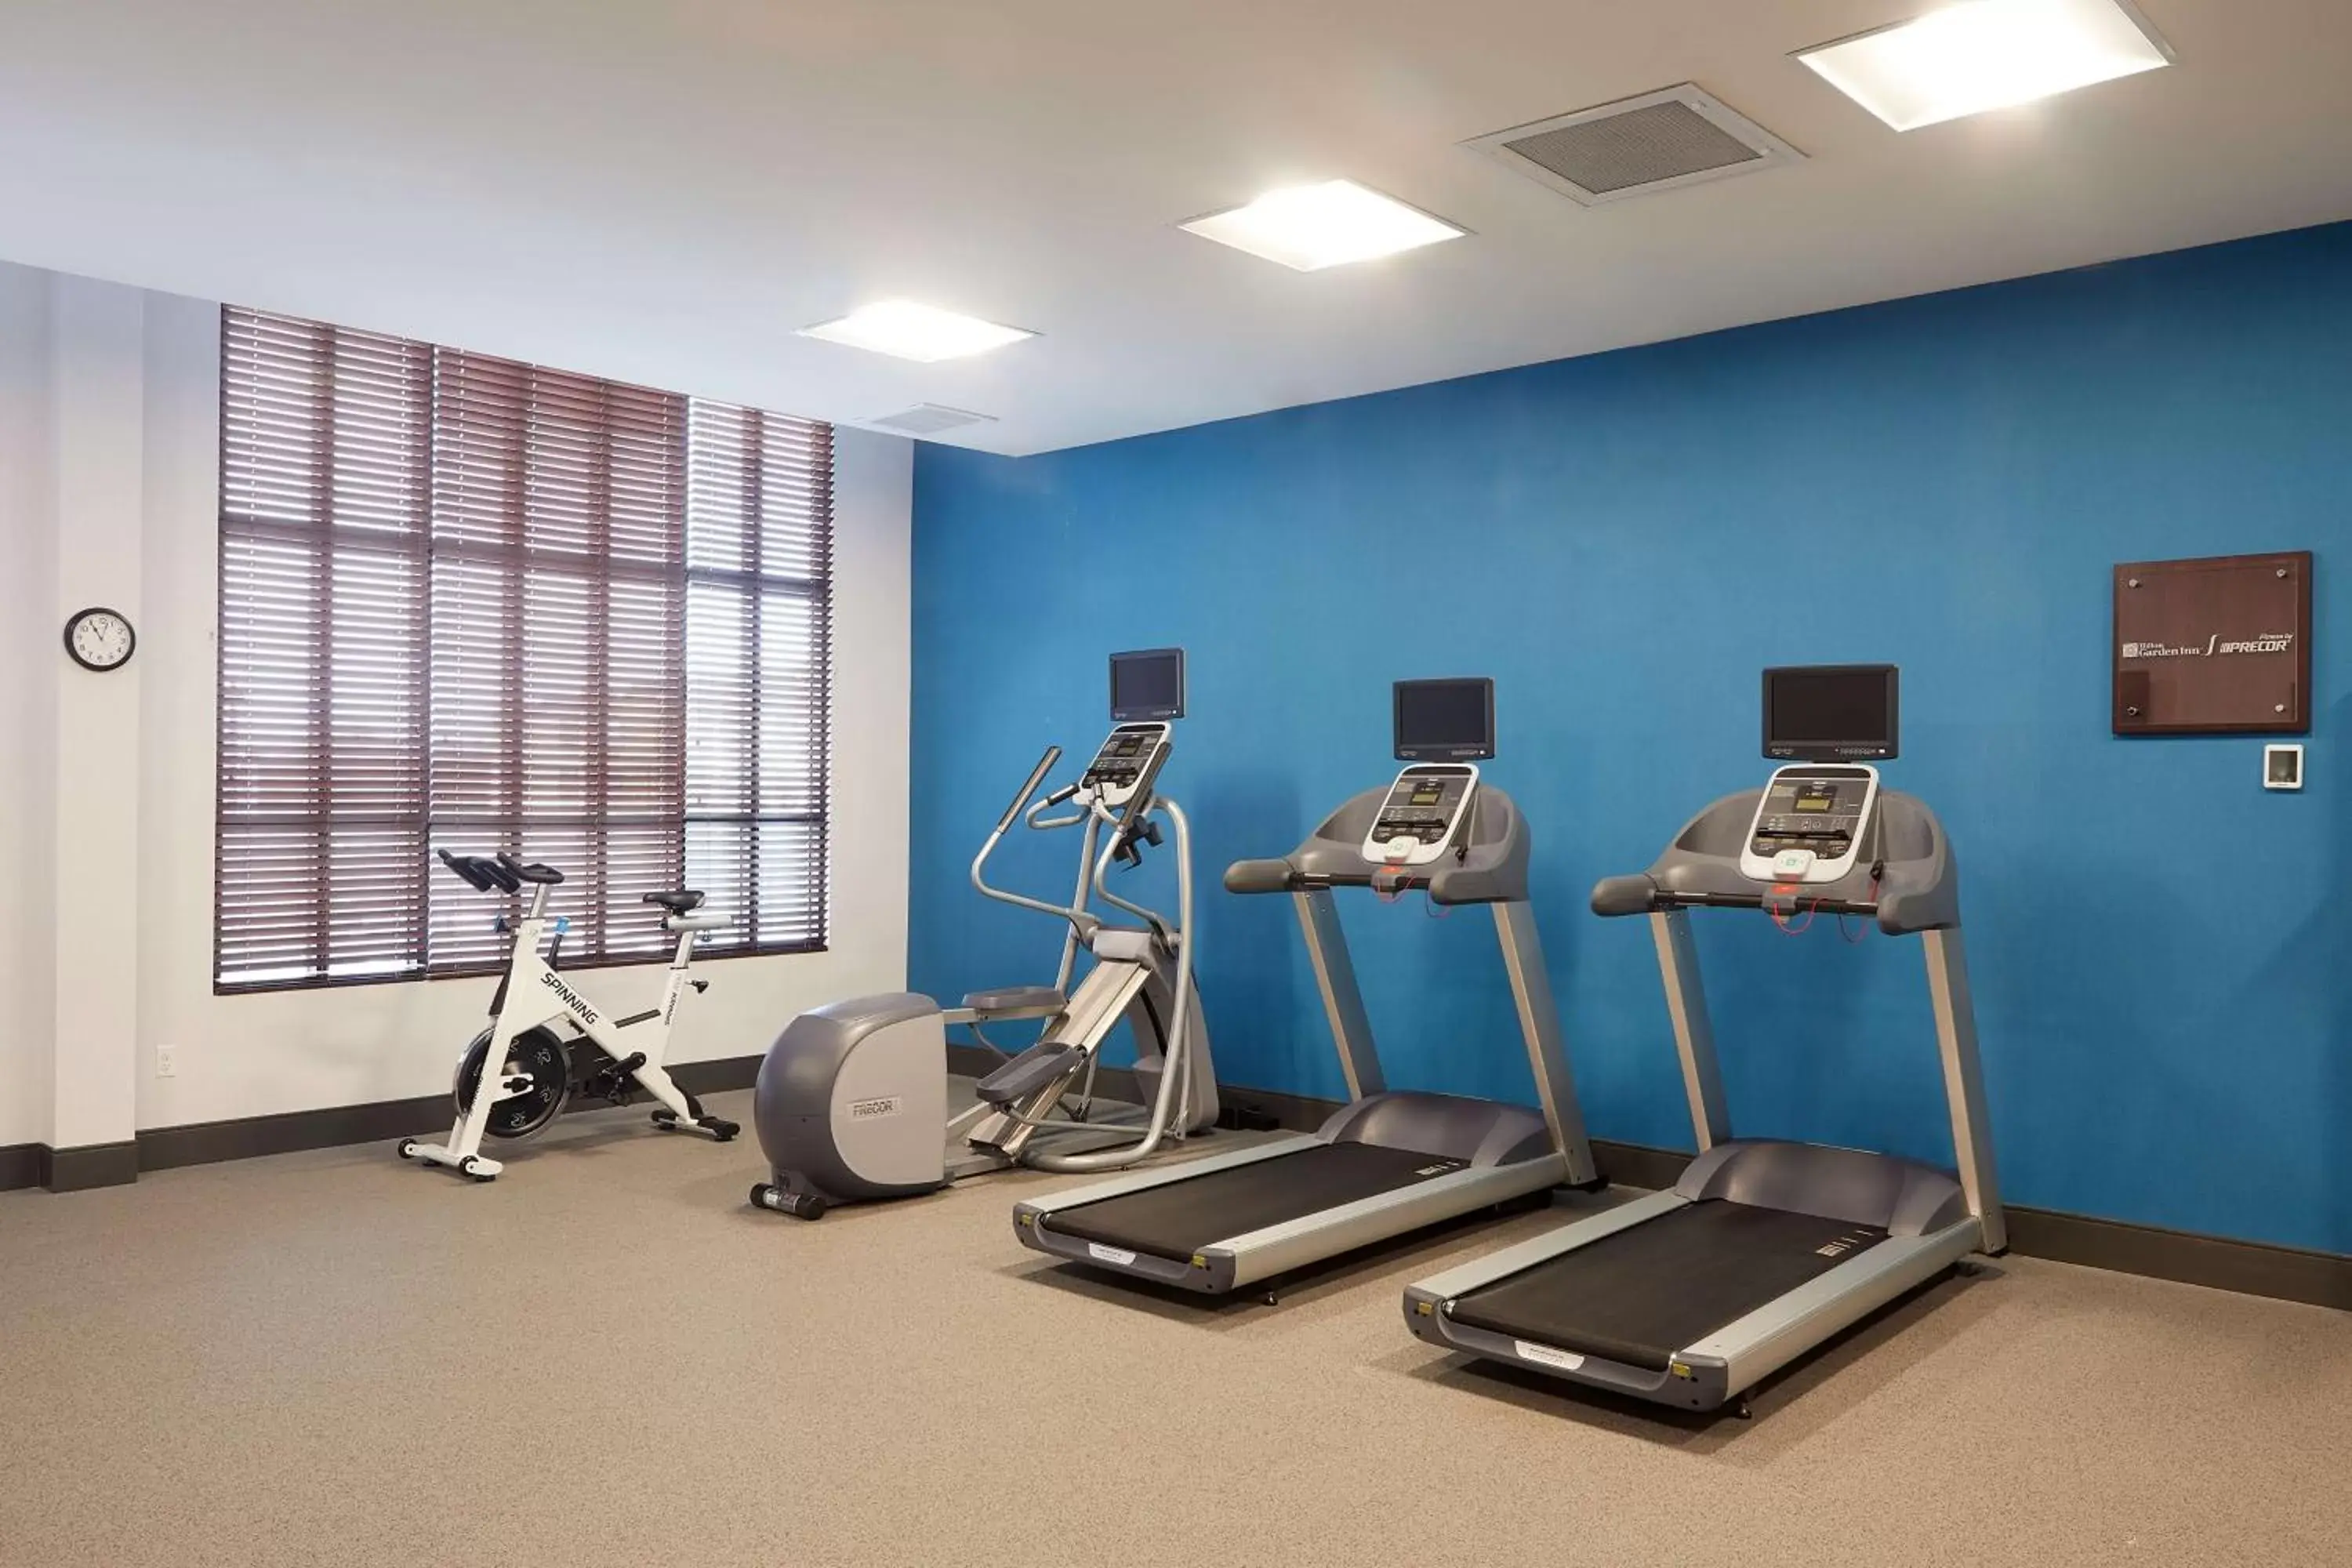 Fitness centre/facilities, Fitness Center/Facilities in Hilton Garden Inn Elizabethtown